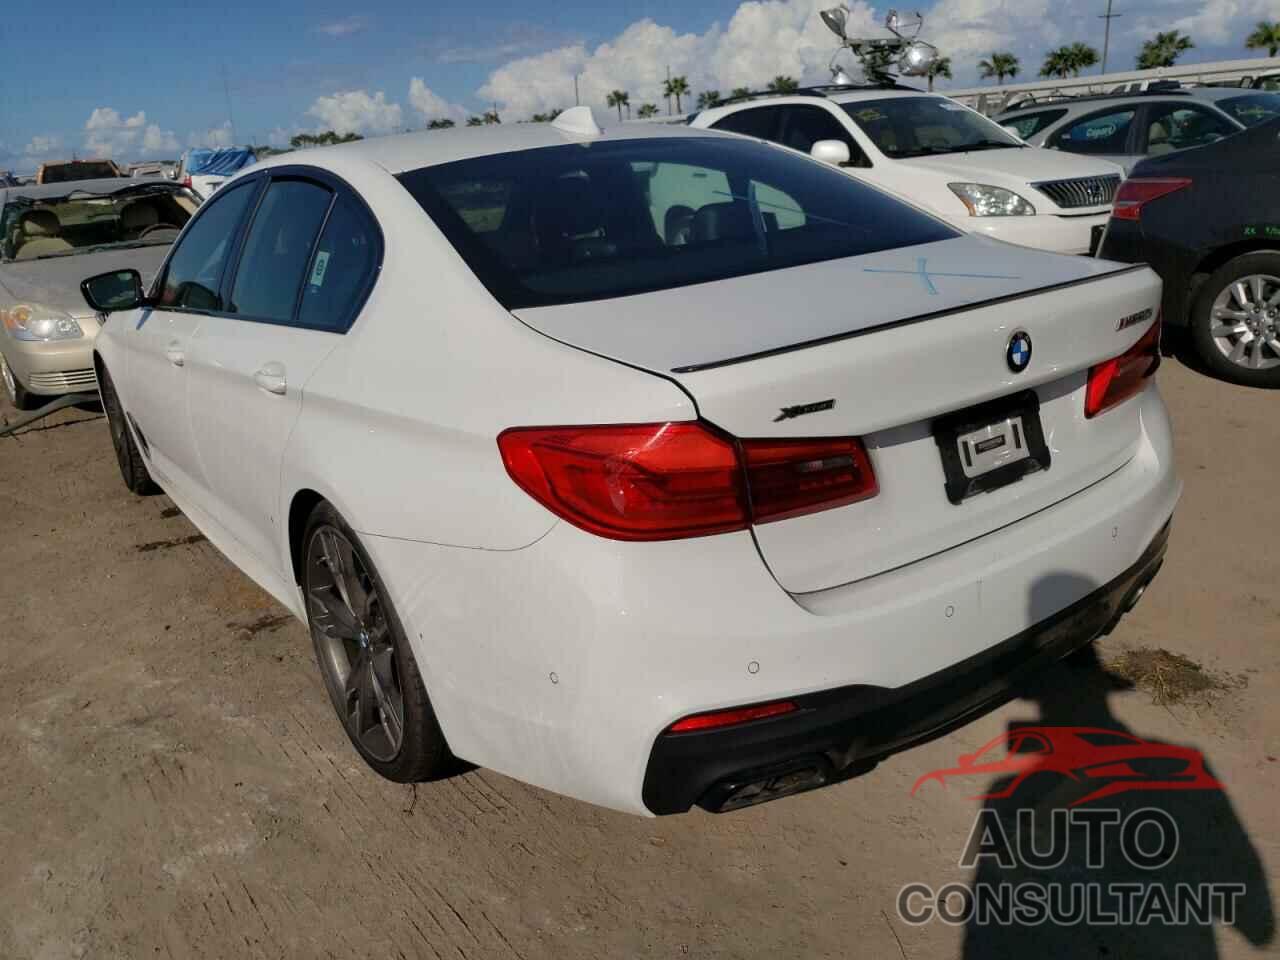 BMW M5 2020 - WBAJS7C00LBN96347